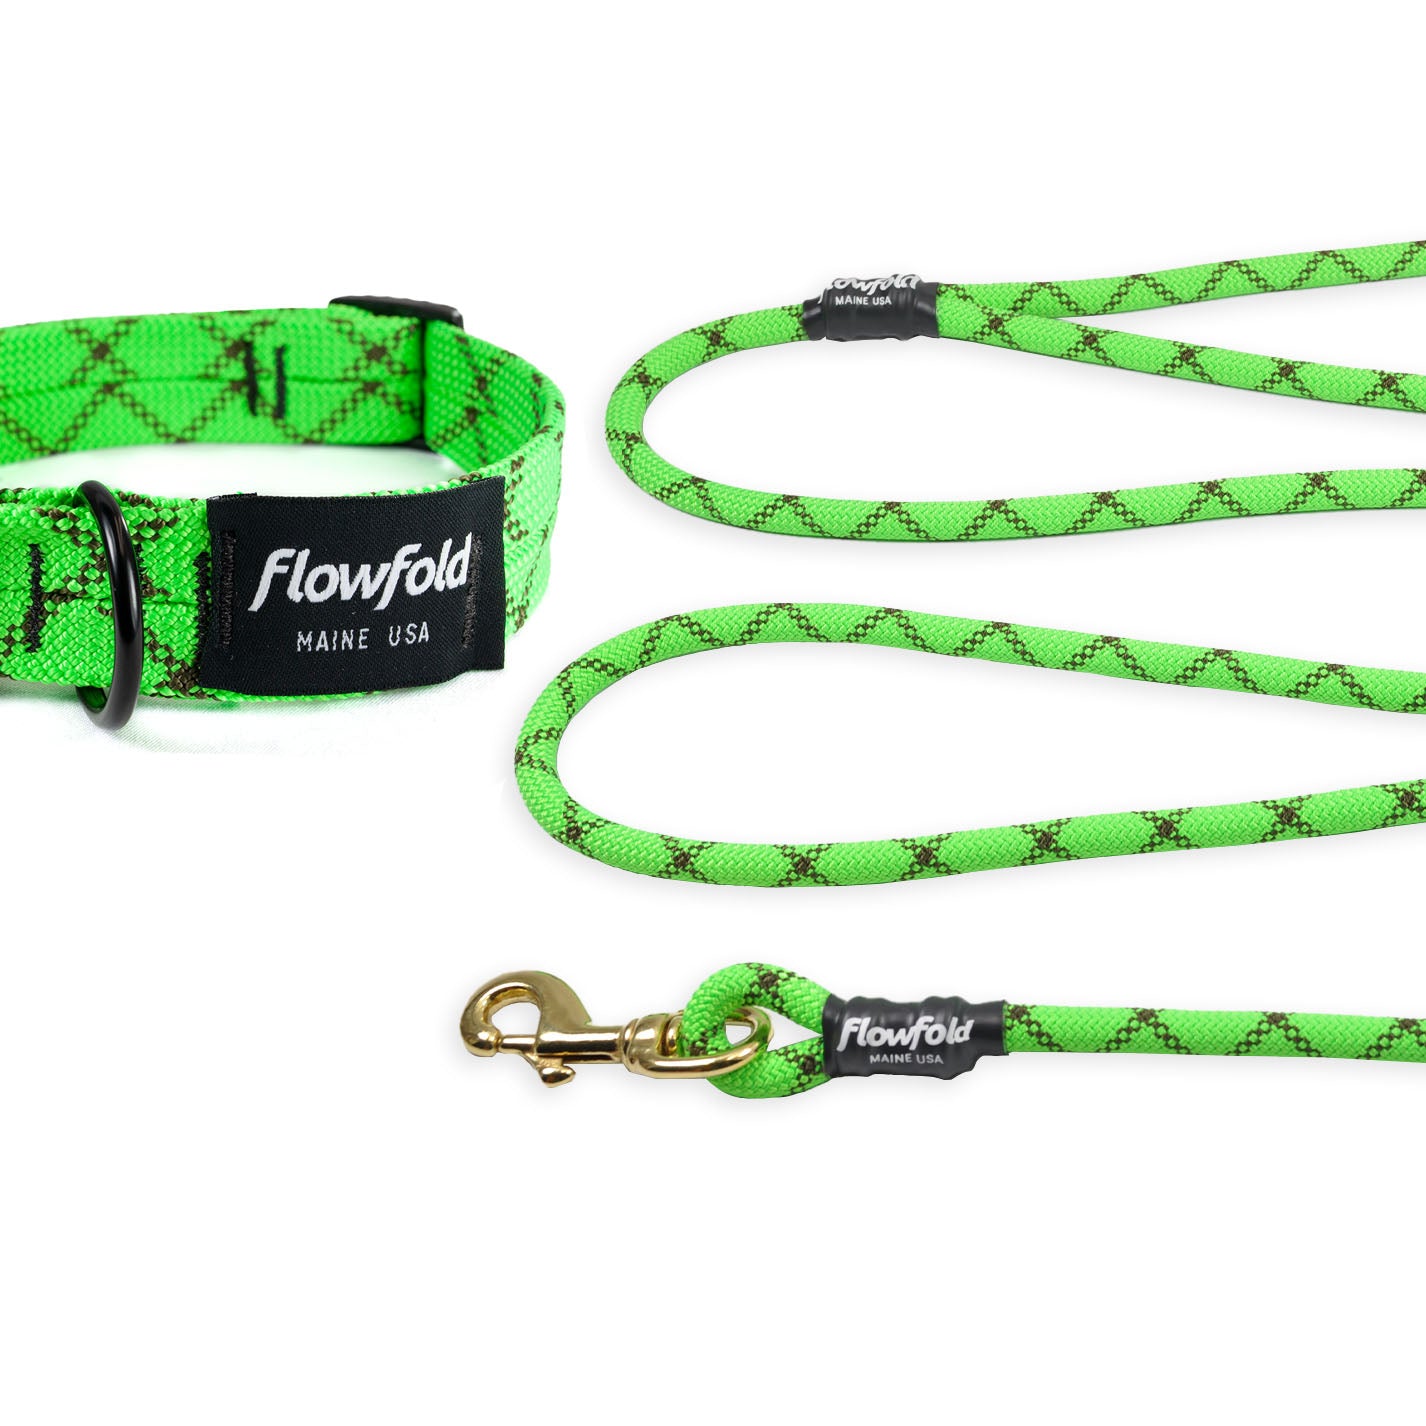 Flowfold Coastal Dog Kit: Recycled Climbing Rope Leash + Collar Set, Green